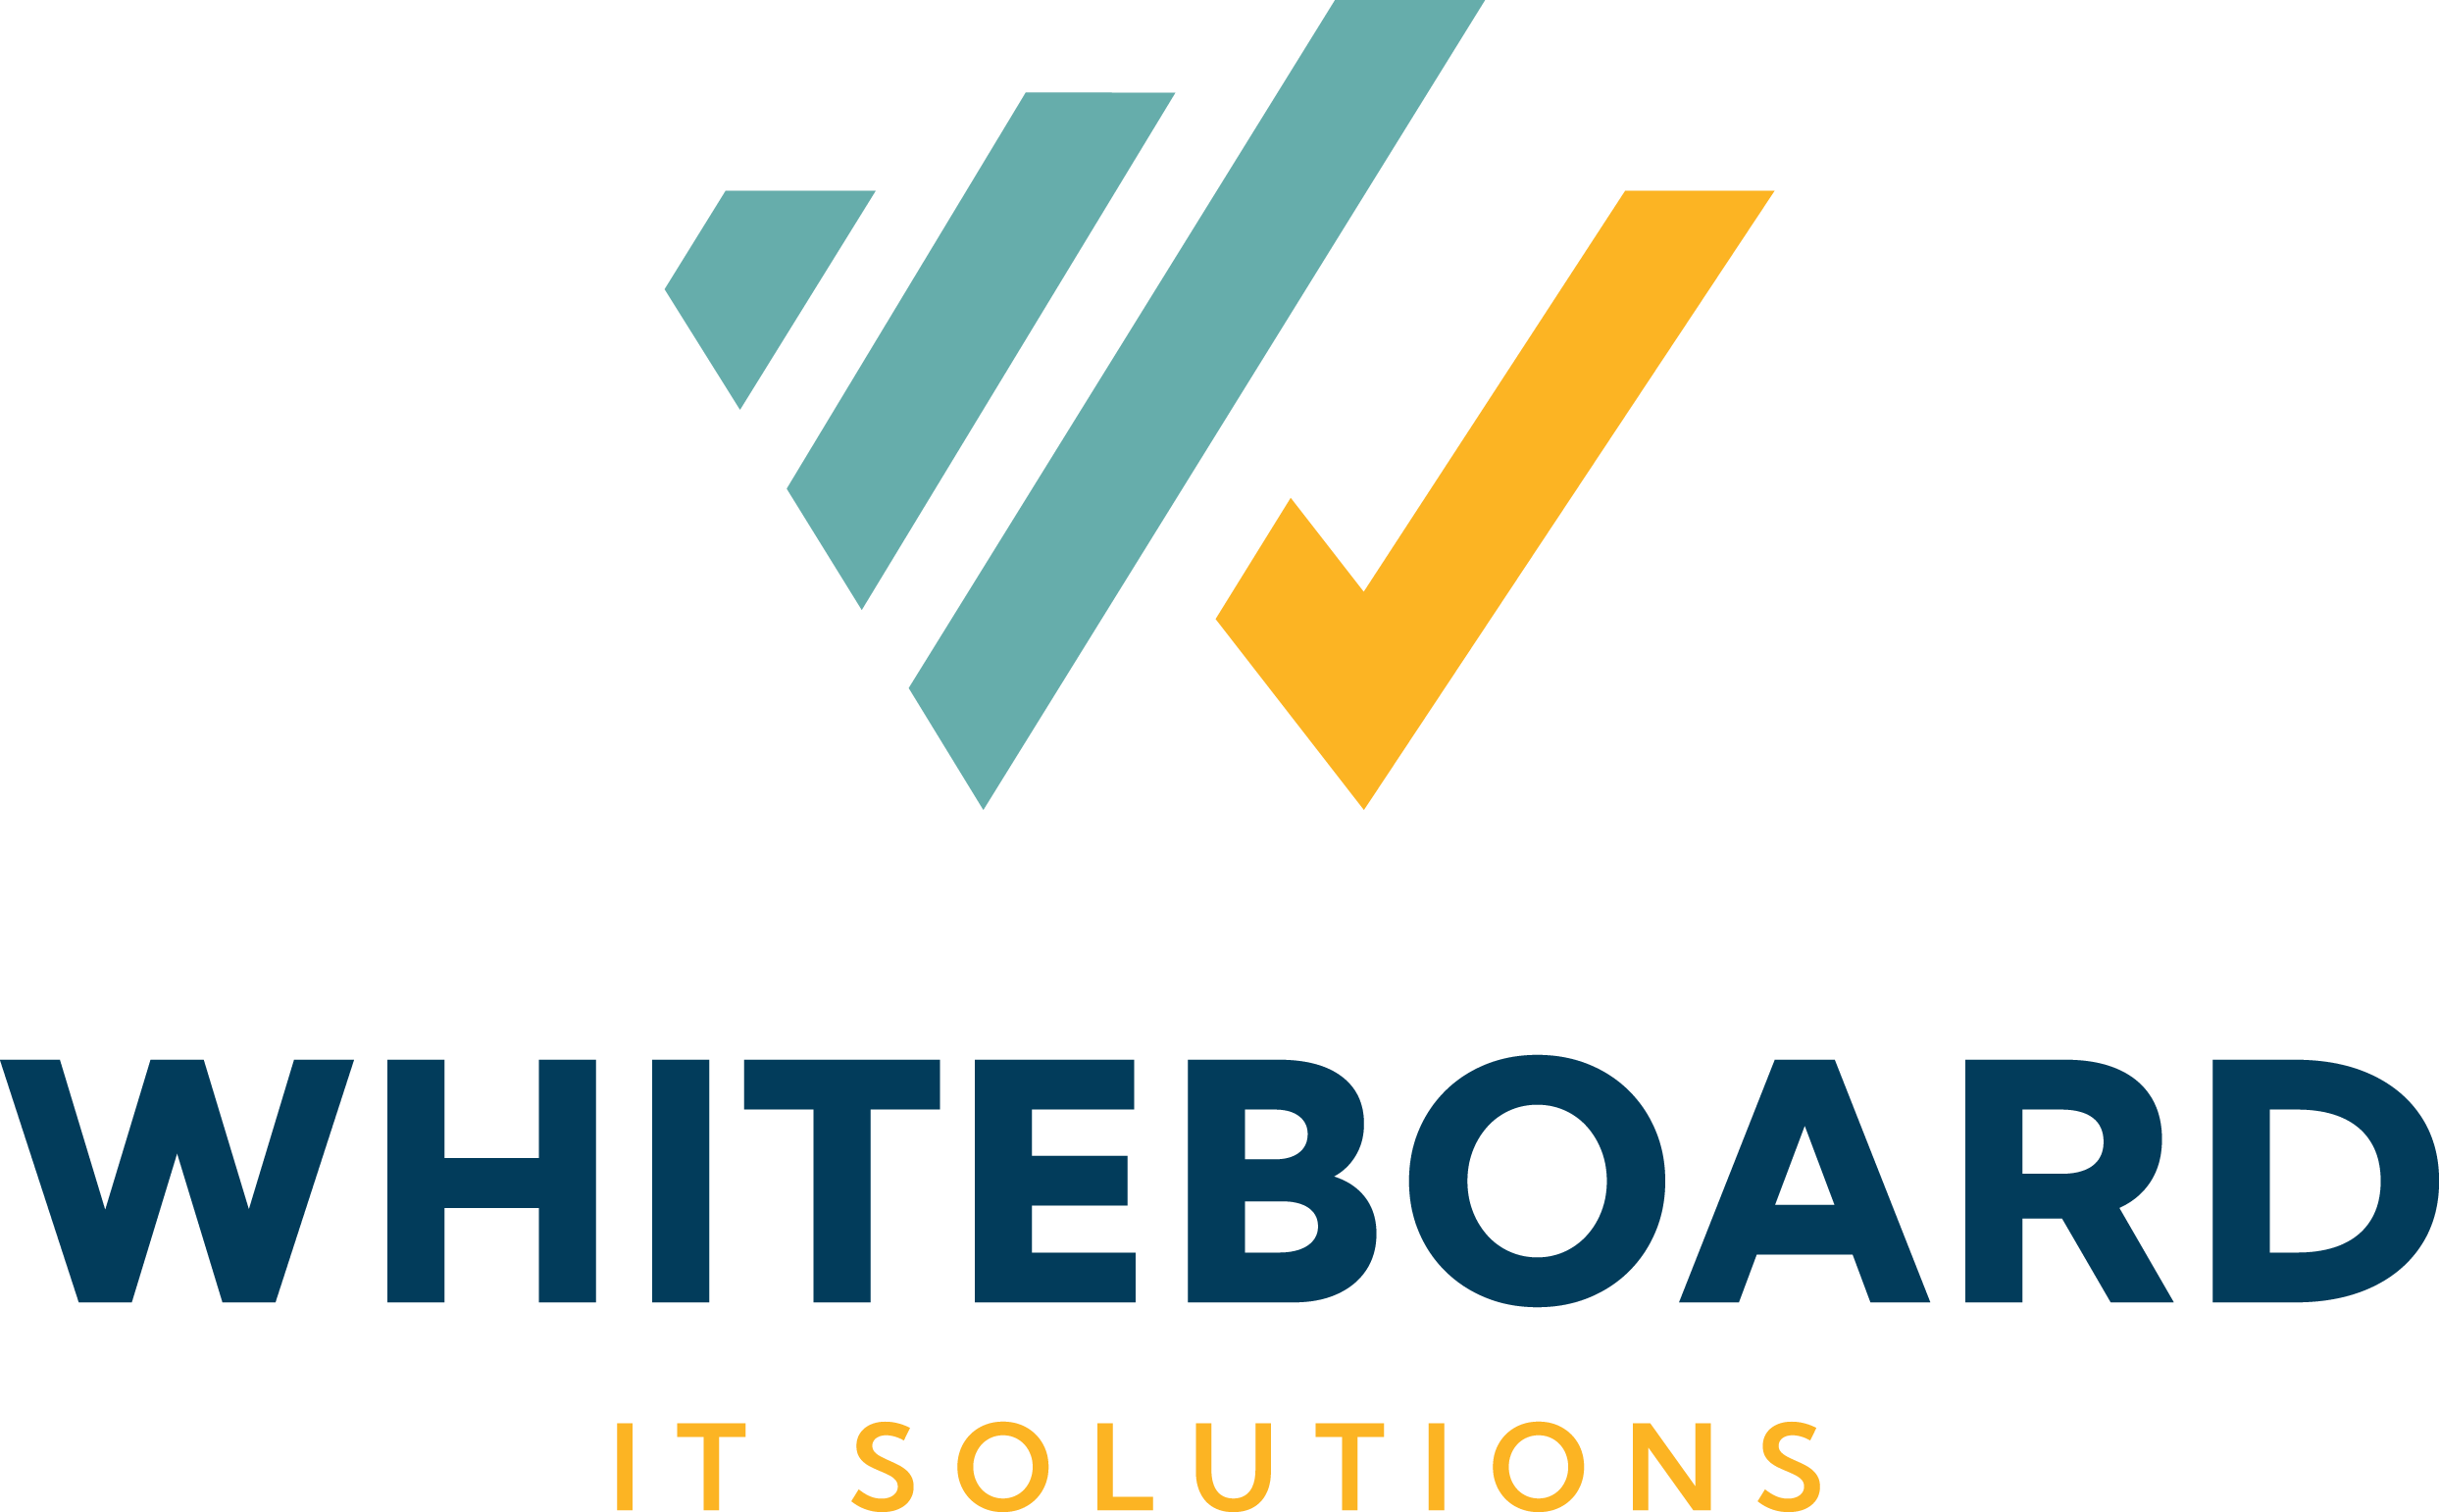 Whiteboard IT Solutions